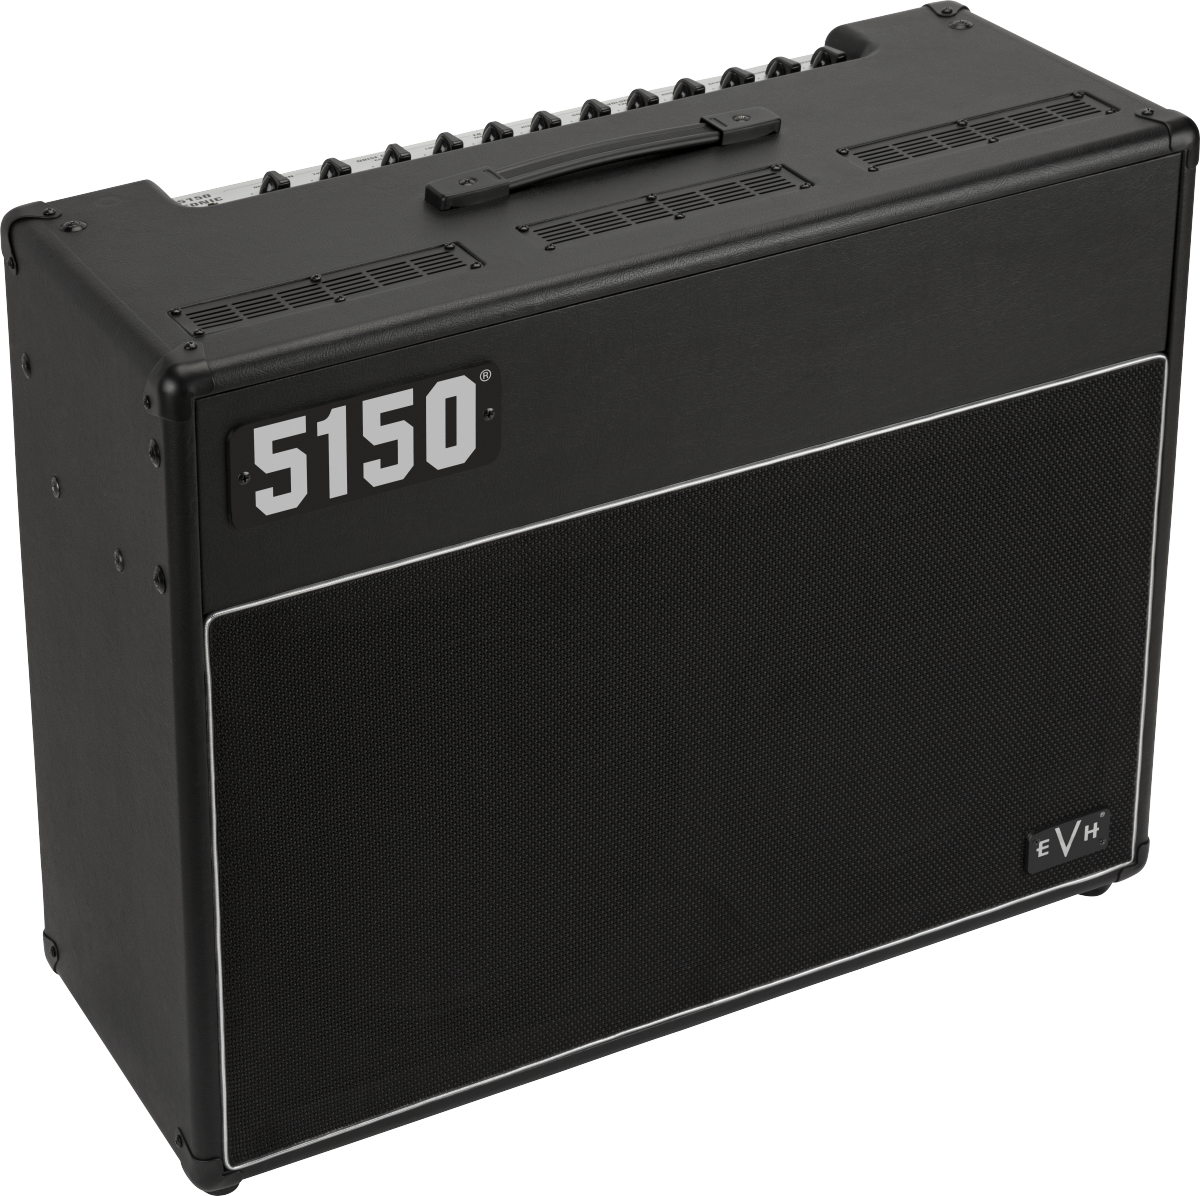 Evh 5150 Iconic Series Combo Black 60w 2x12 - Combo amplificador para guitarra eléctrica - Variation 3